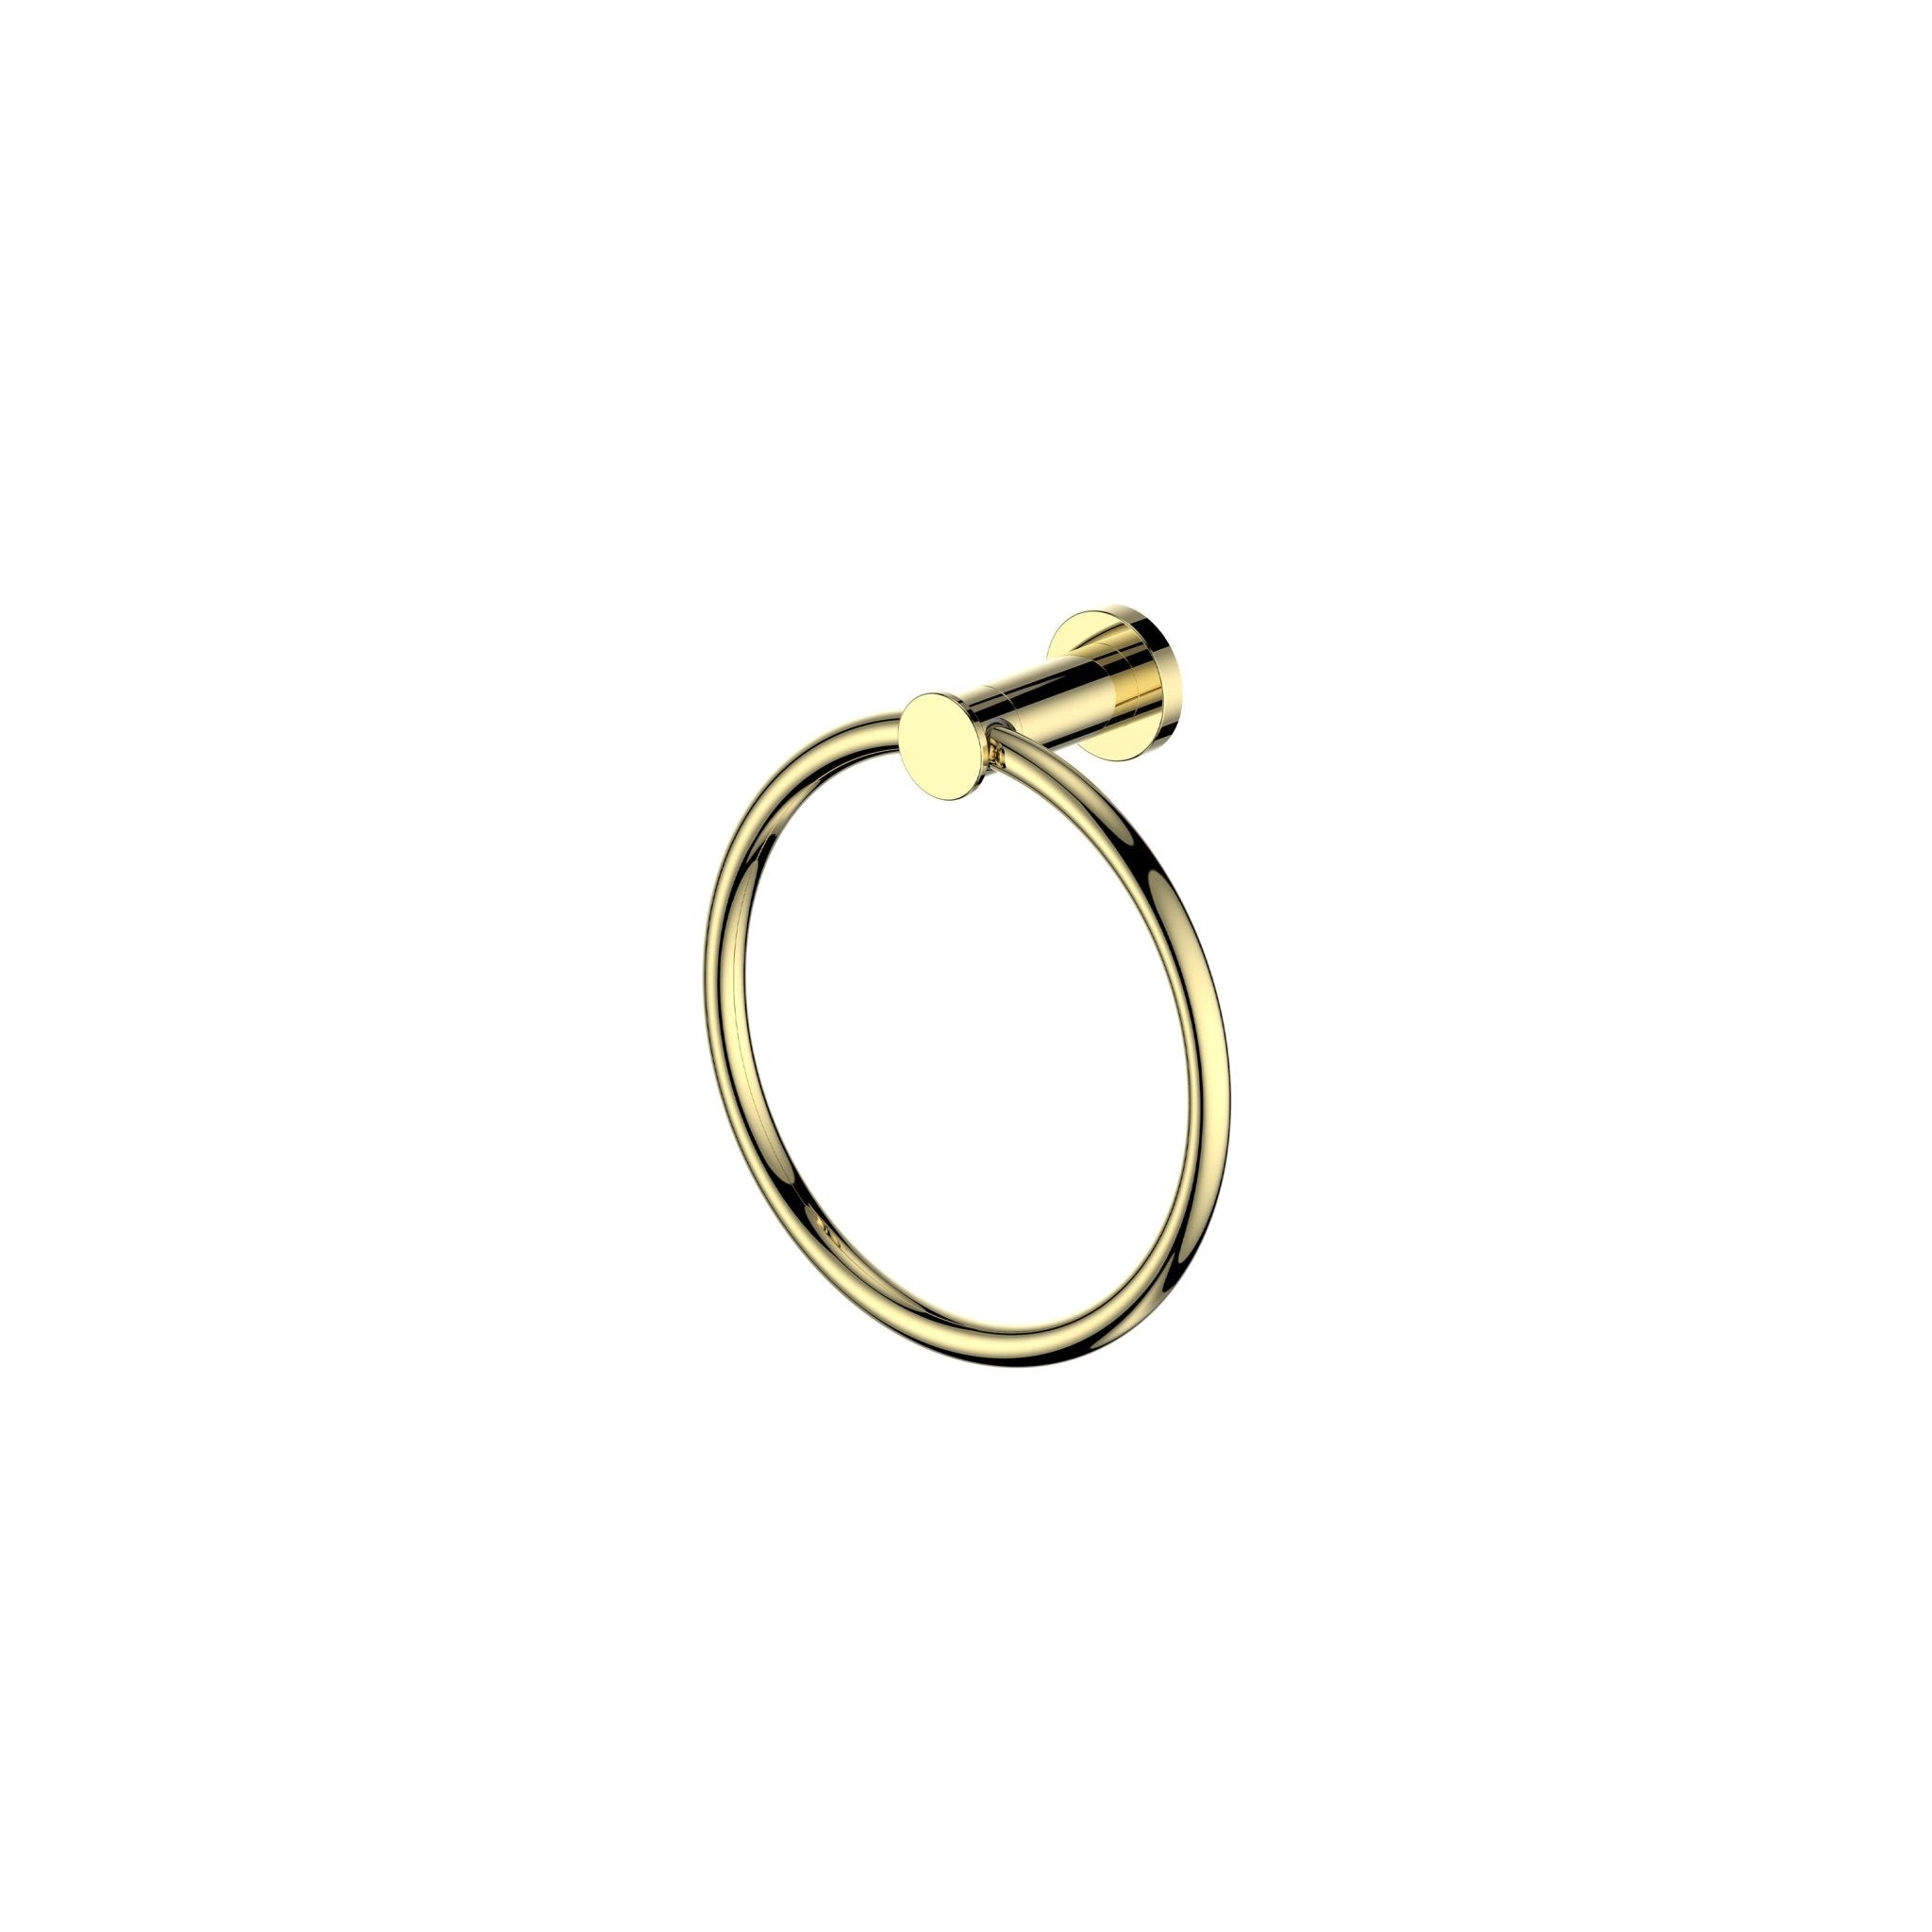 ZLINE Emerald Bay Towel Ring in Polished Gold